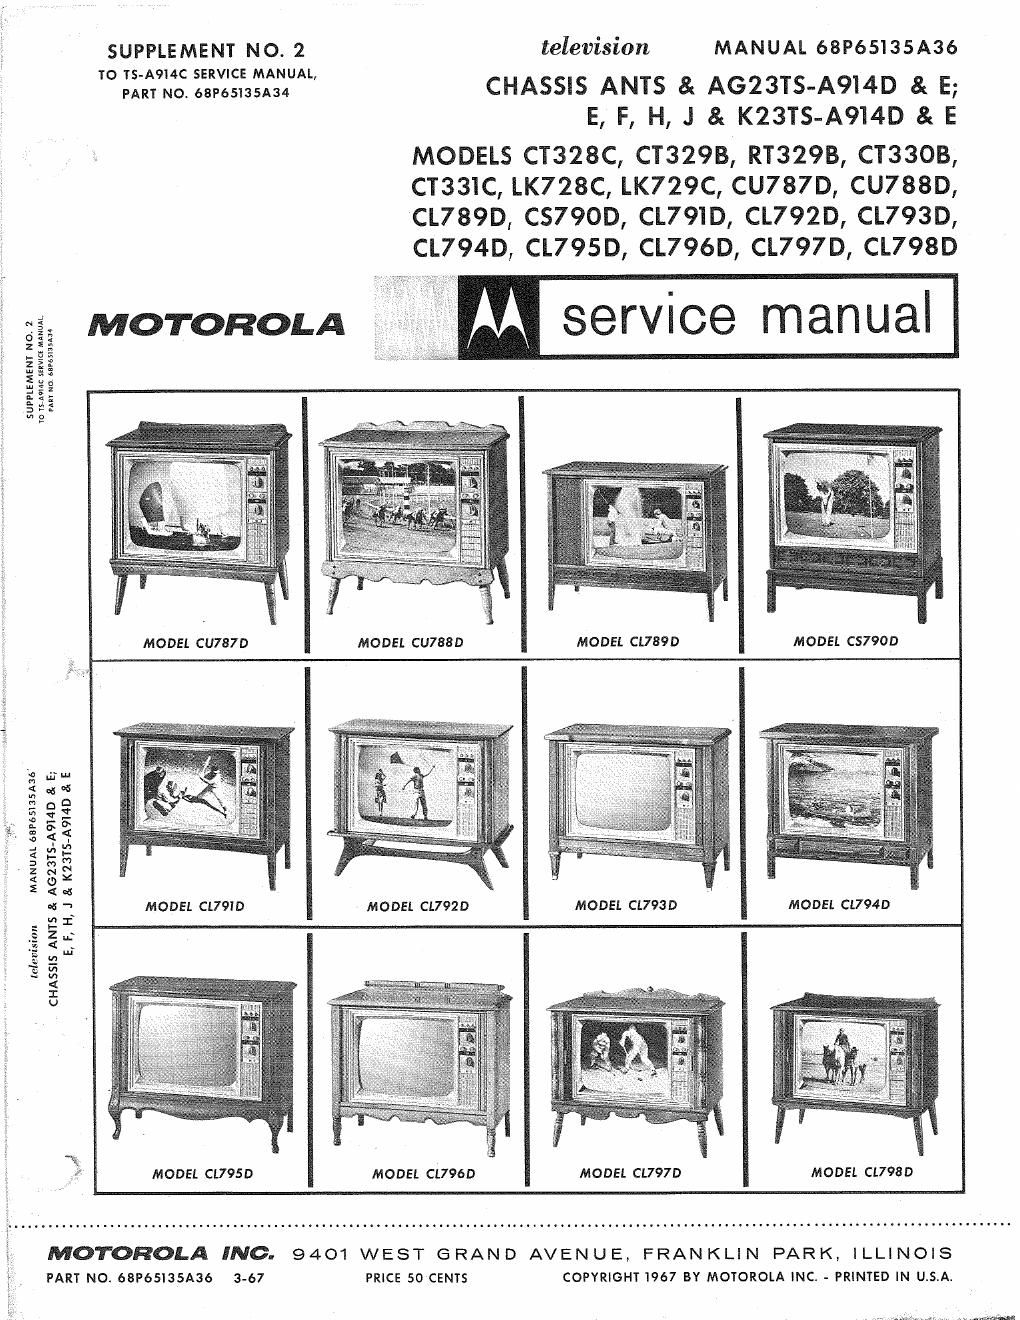 motorola cl 794 d service manual